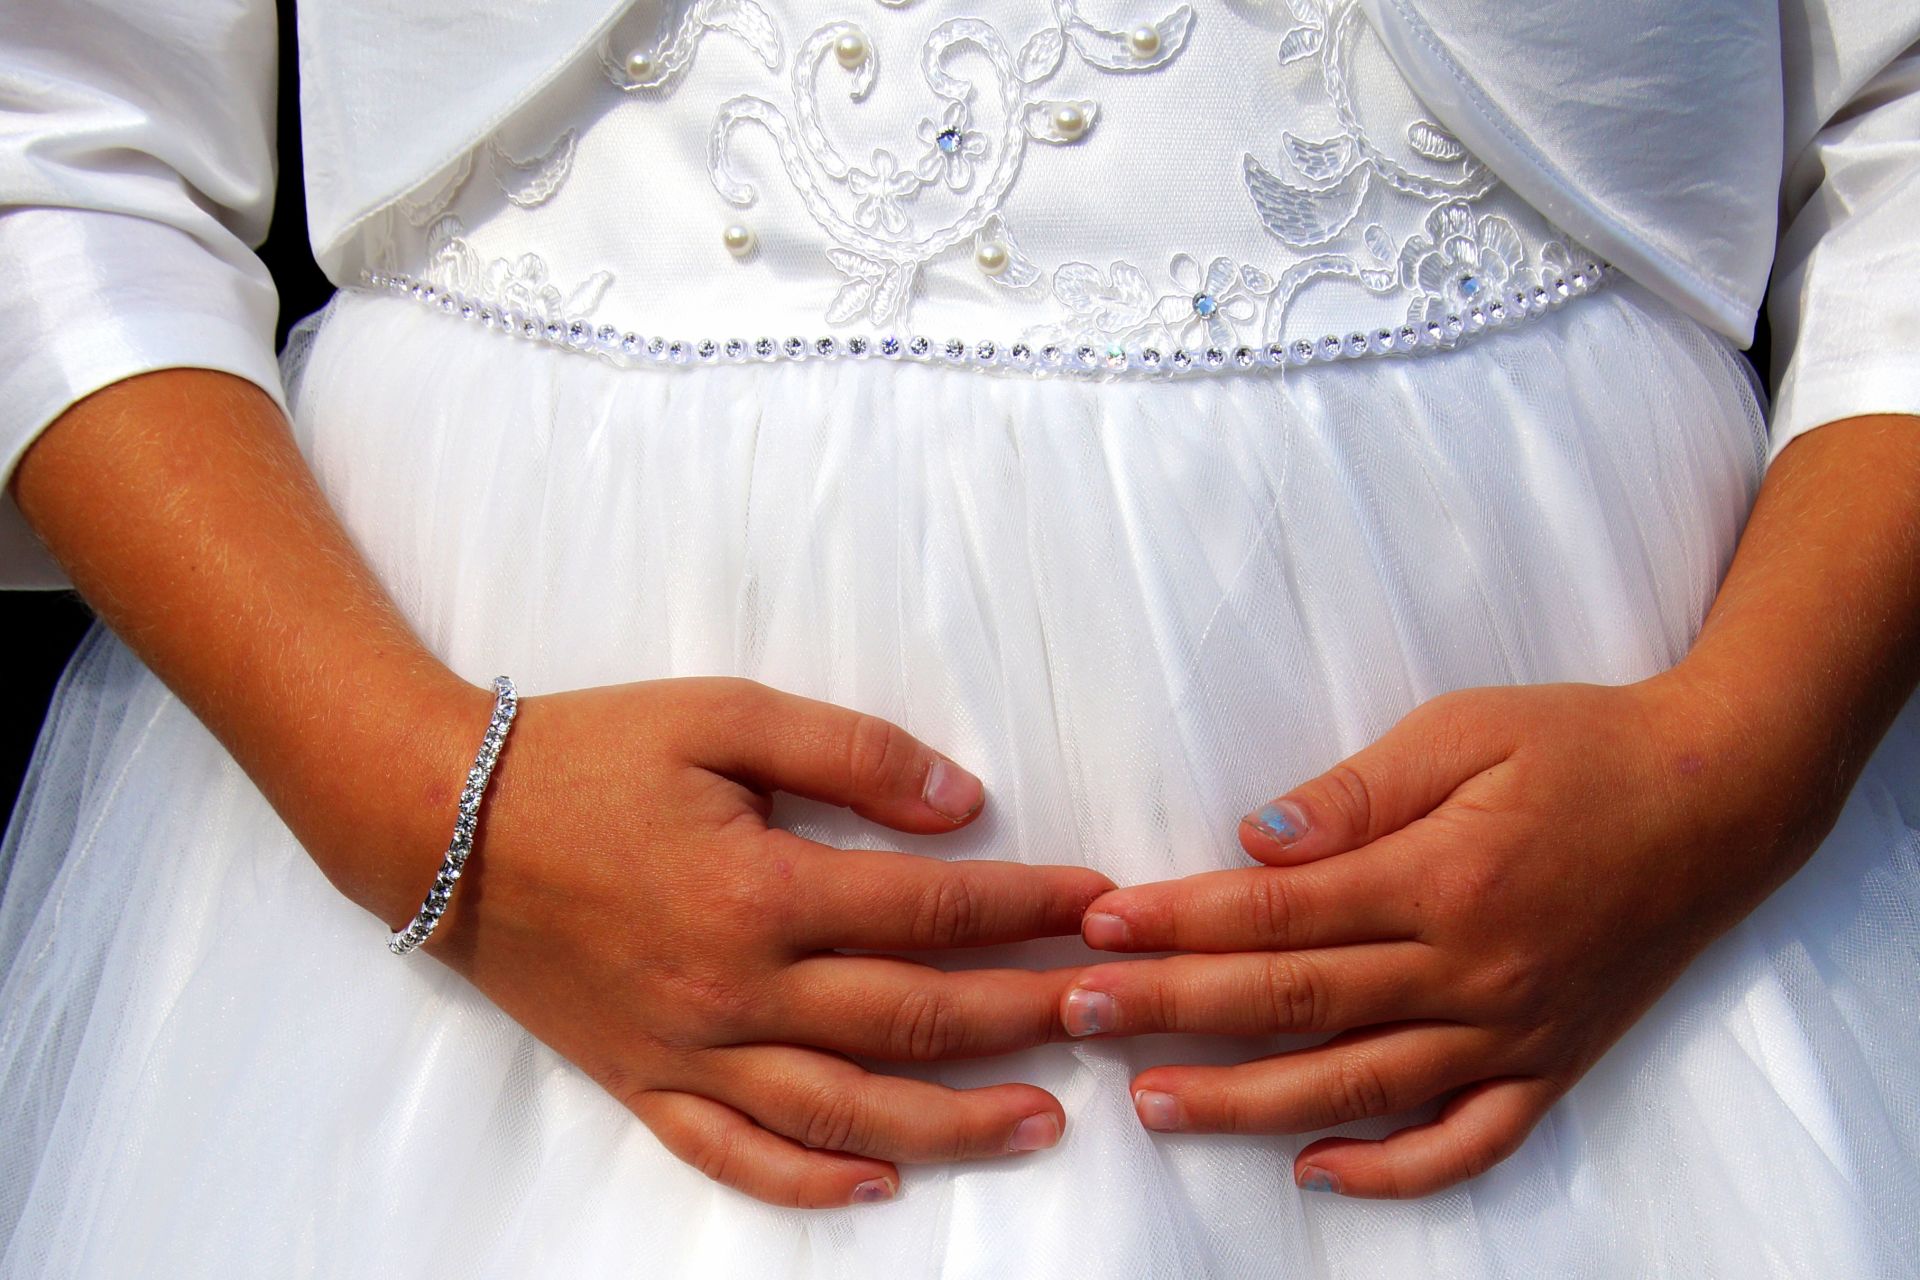 The Child Bride Who Shook Turkey